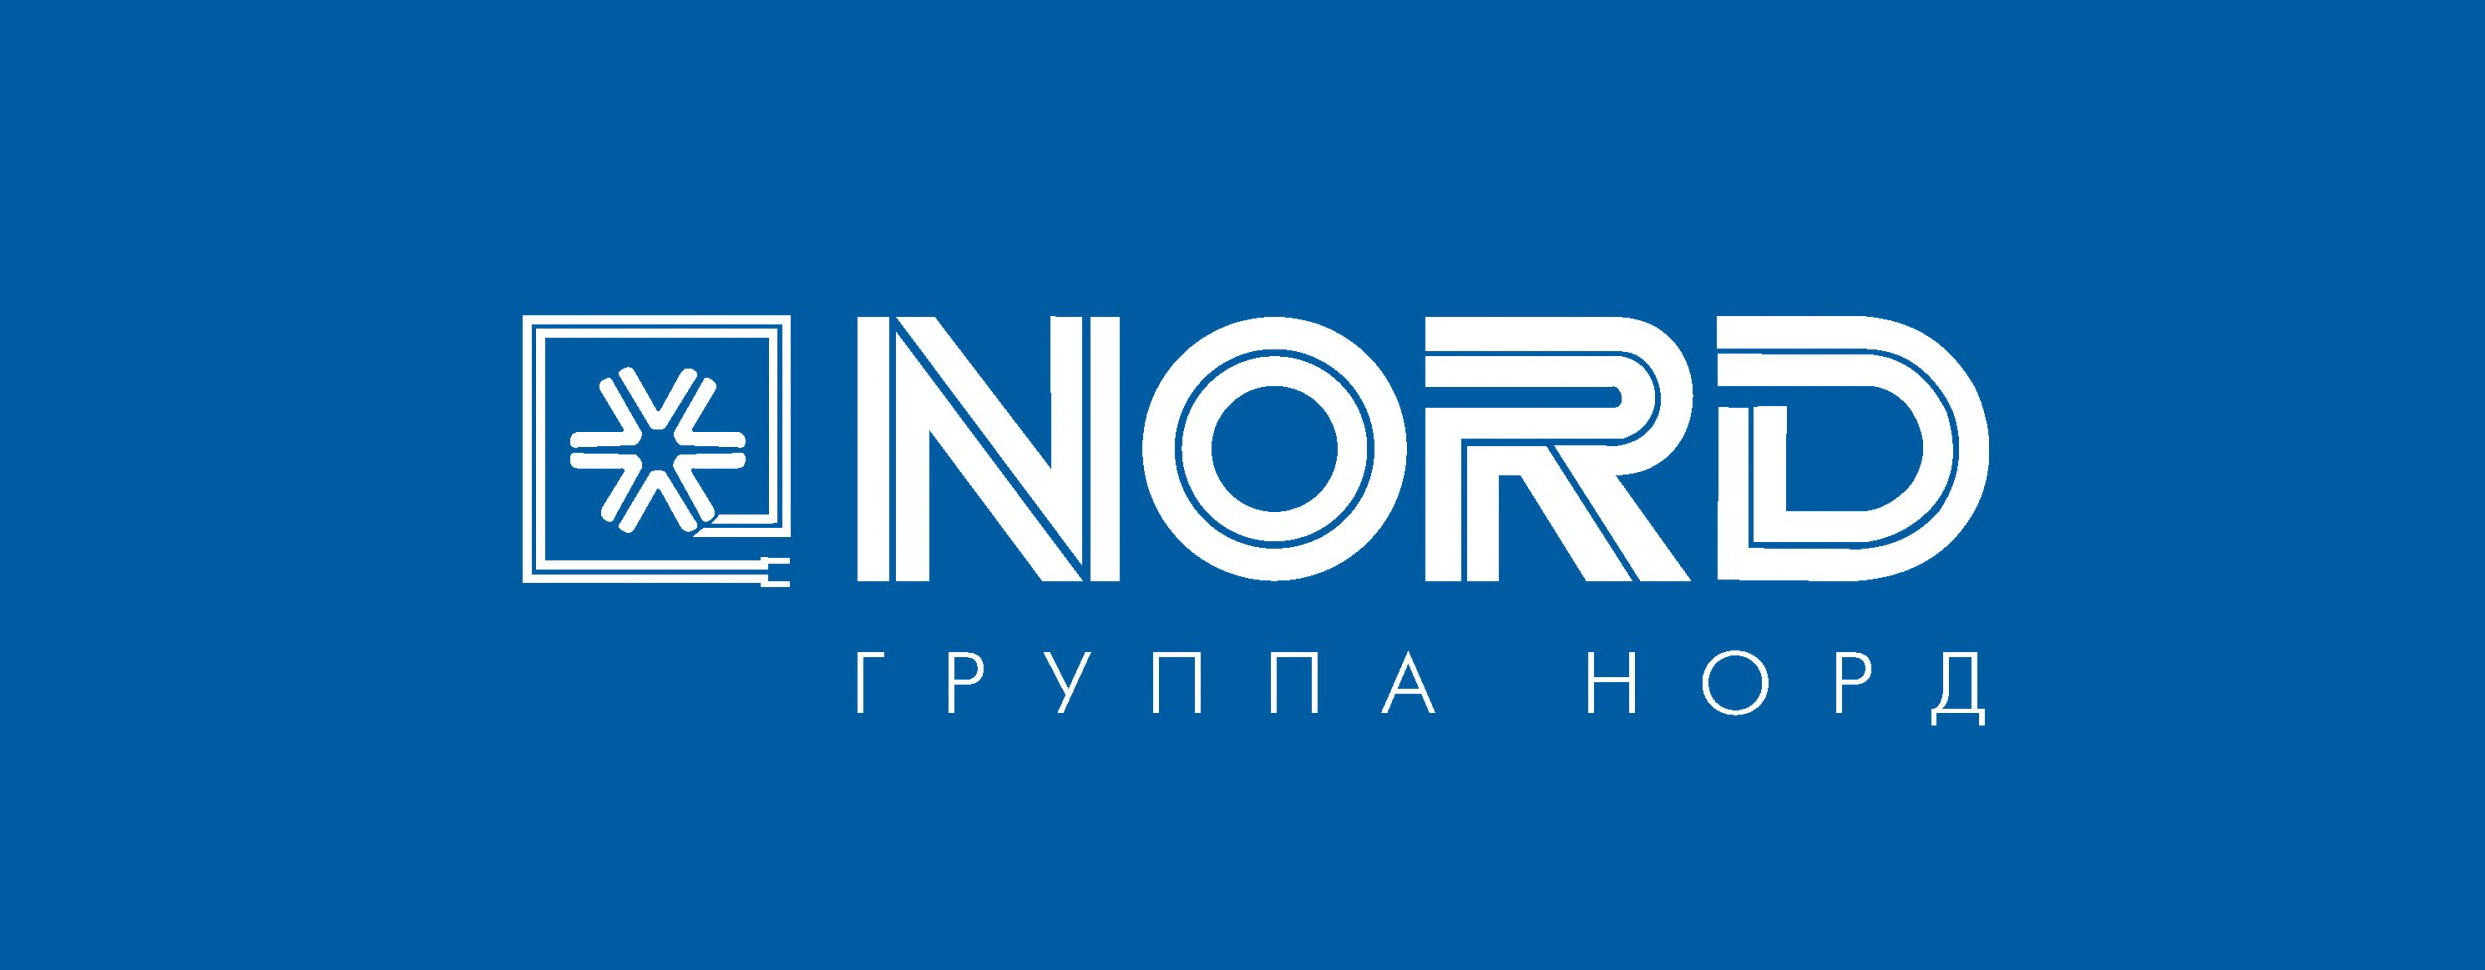 nord logo